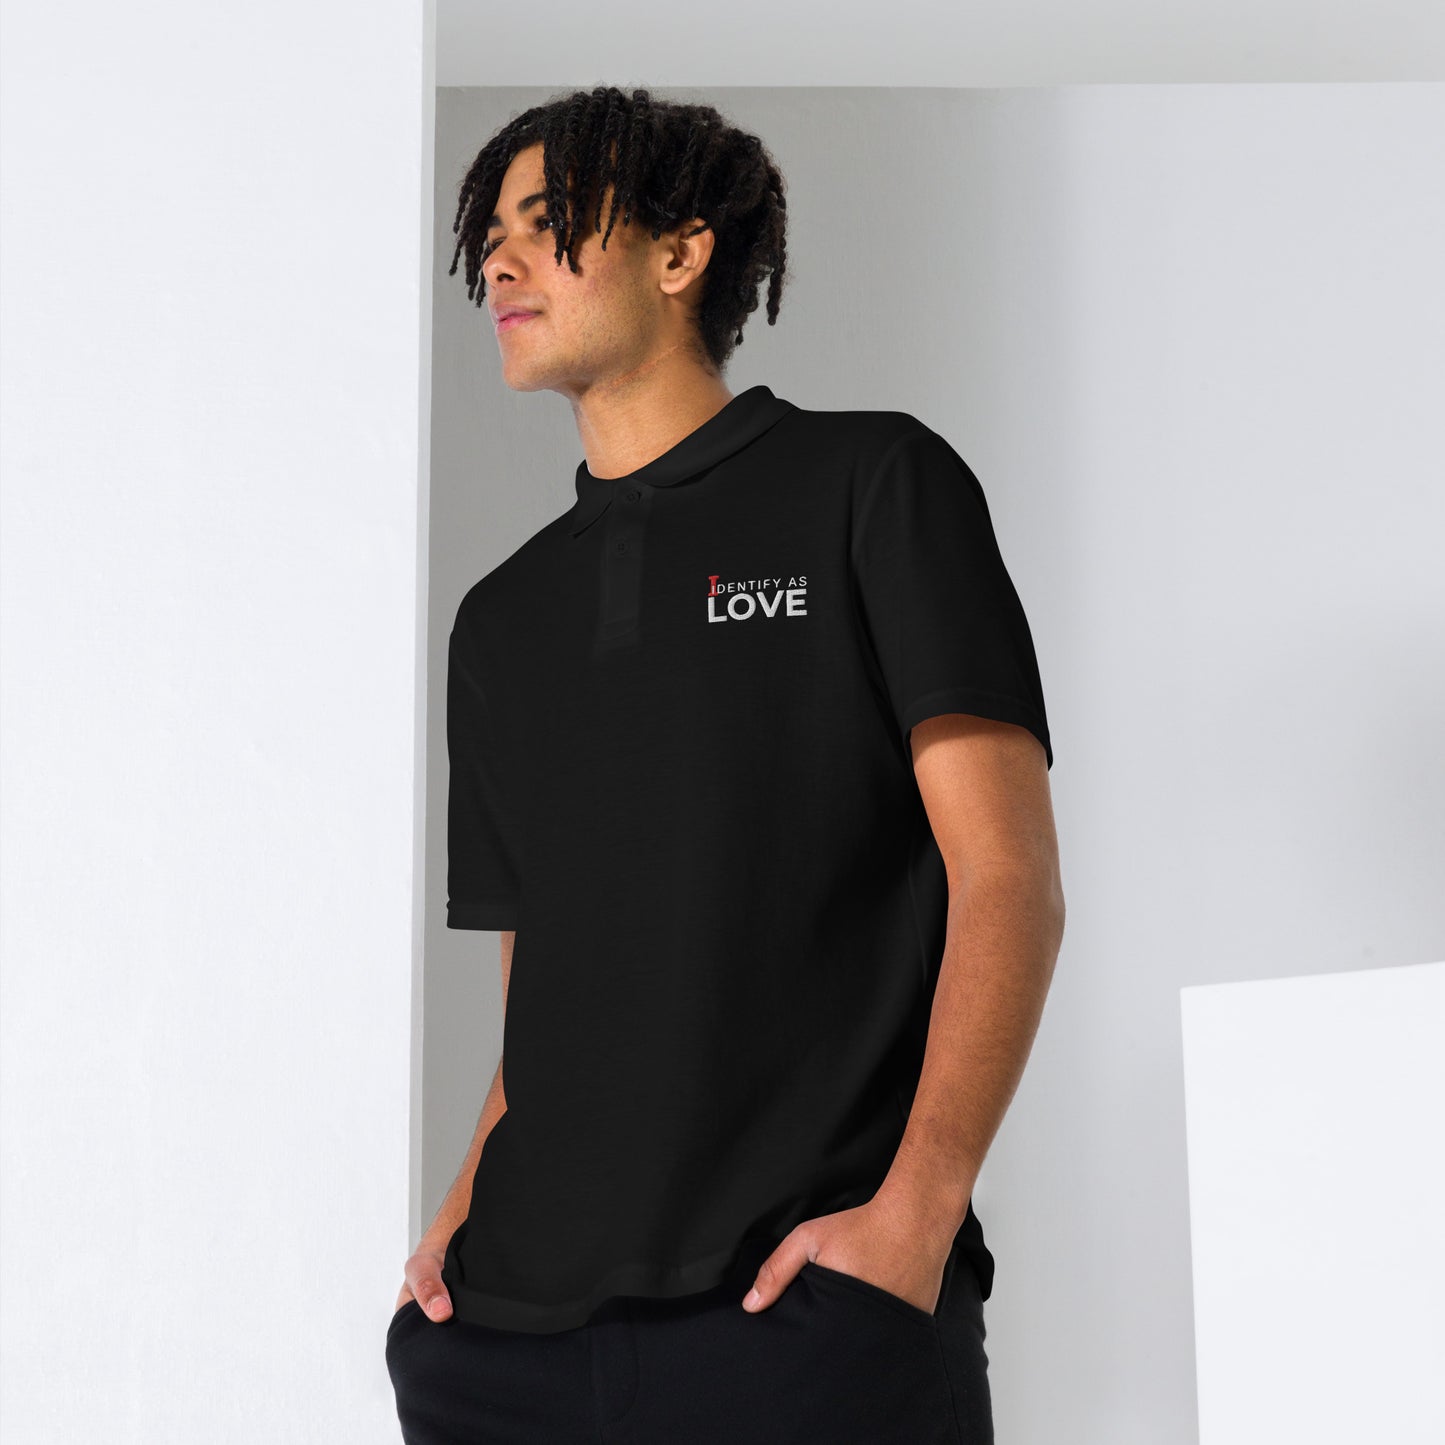 Identify As Love Unisex pique polo shirt